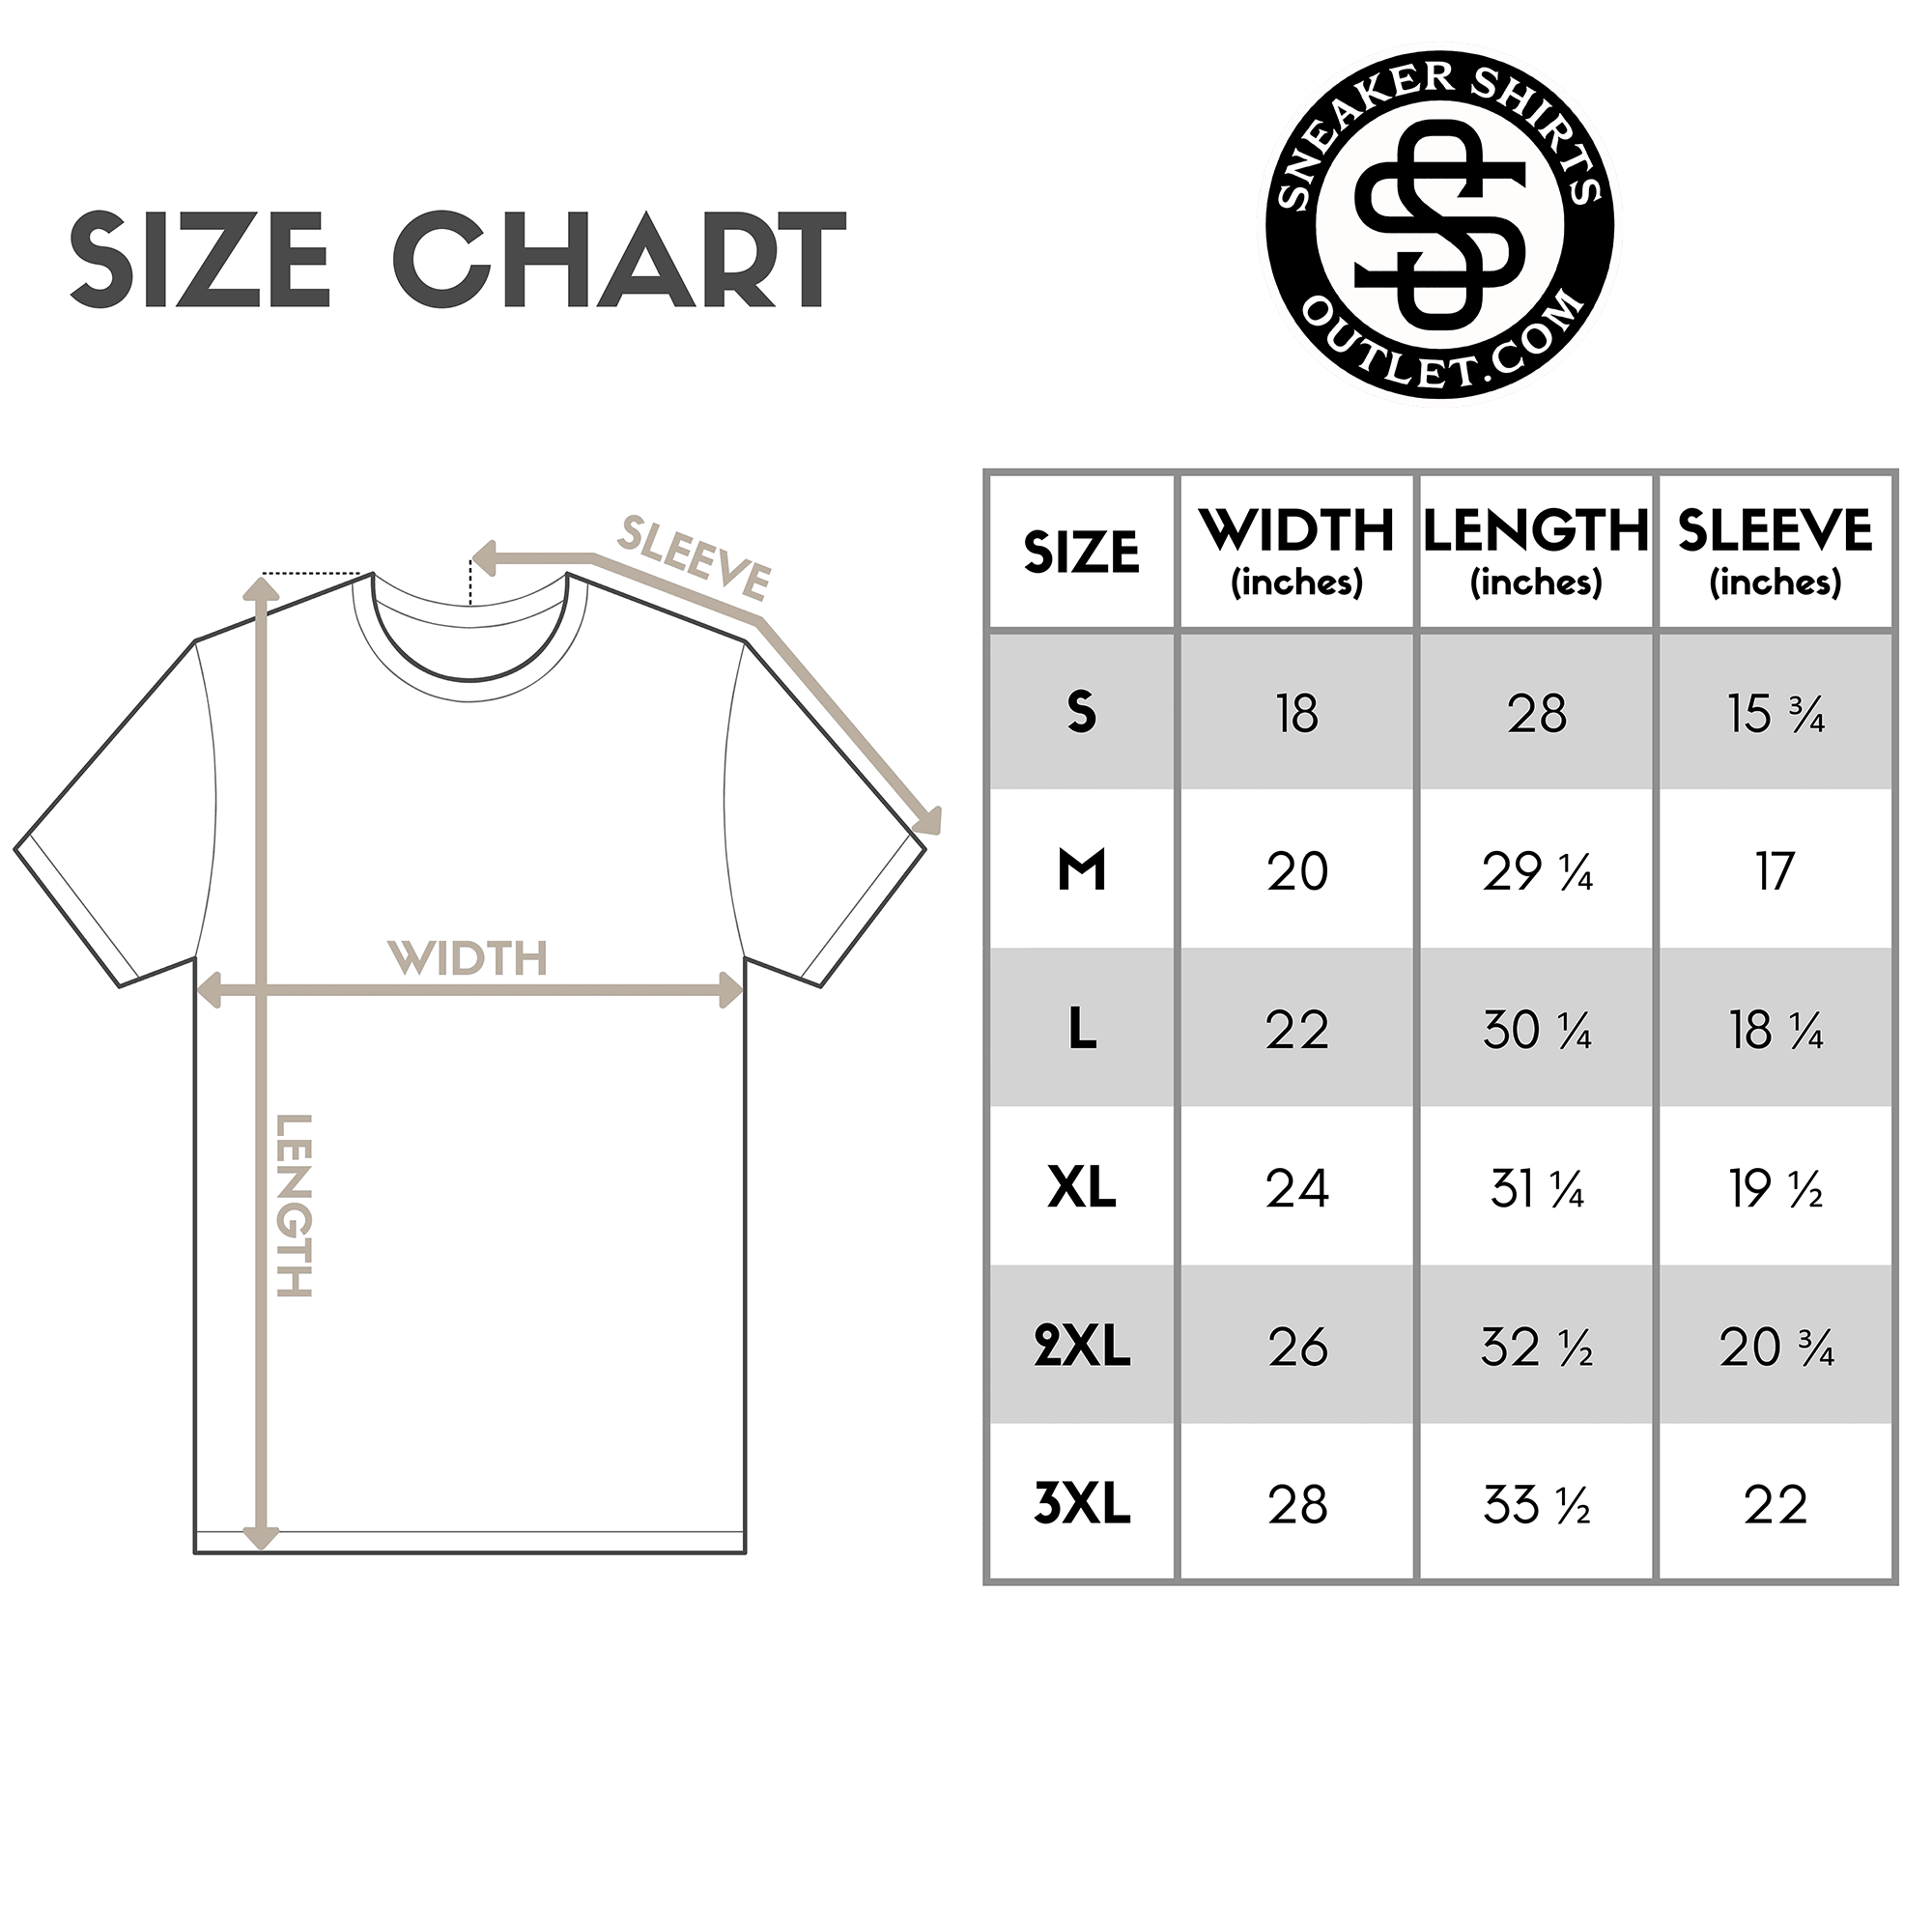 23 Drip Shirt Jordan 5s Arctic Orange size chart photo